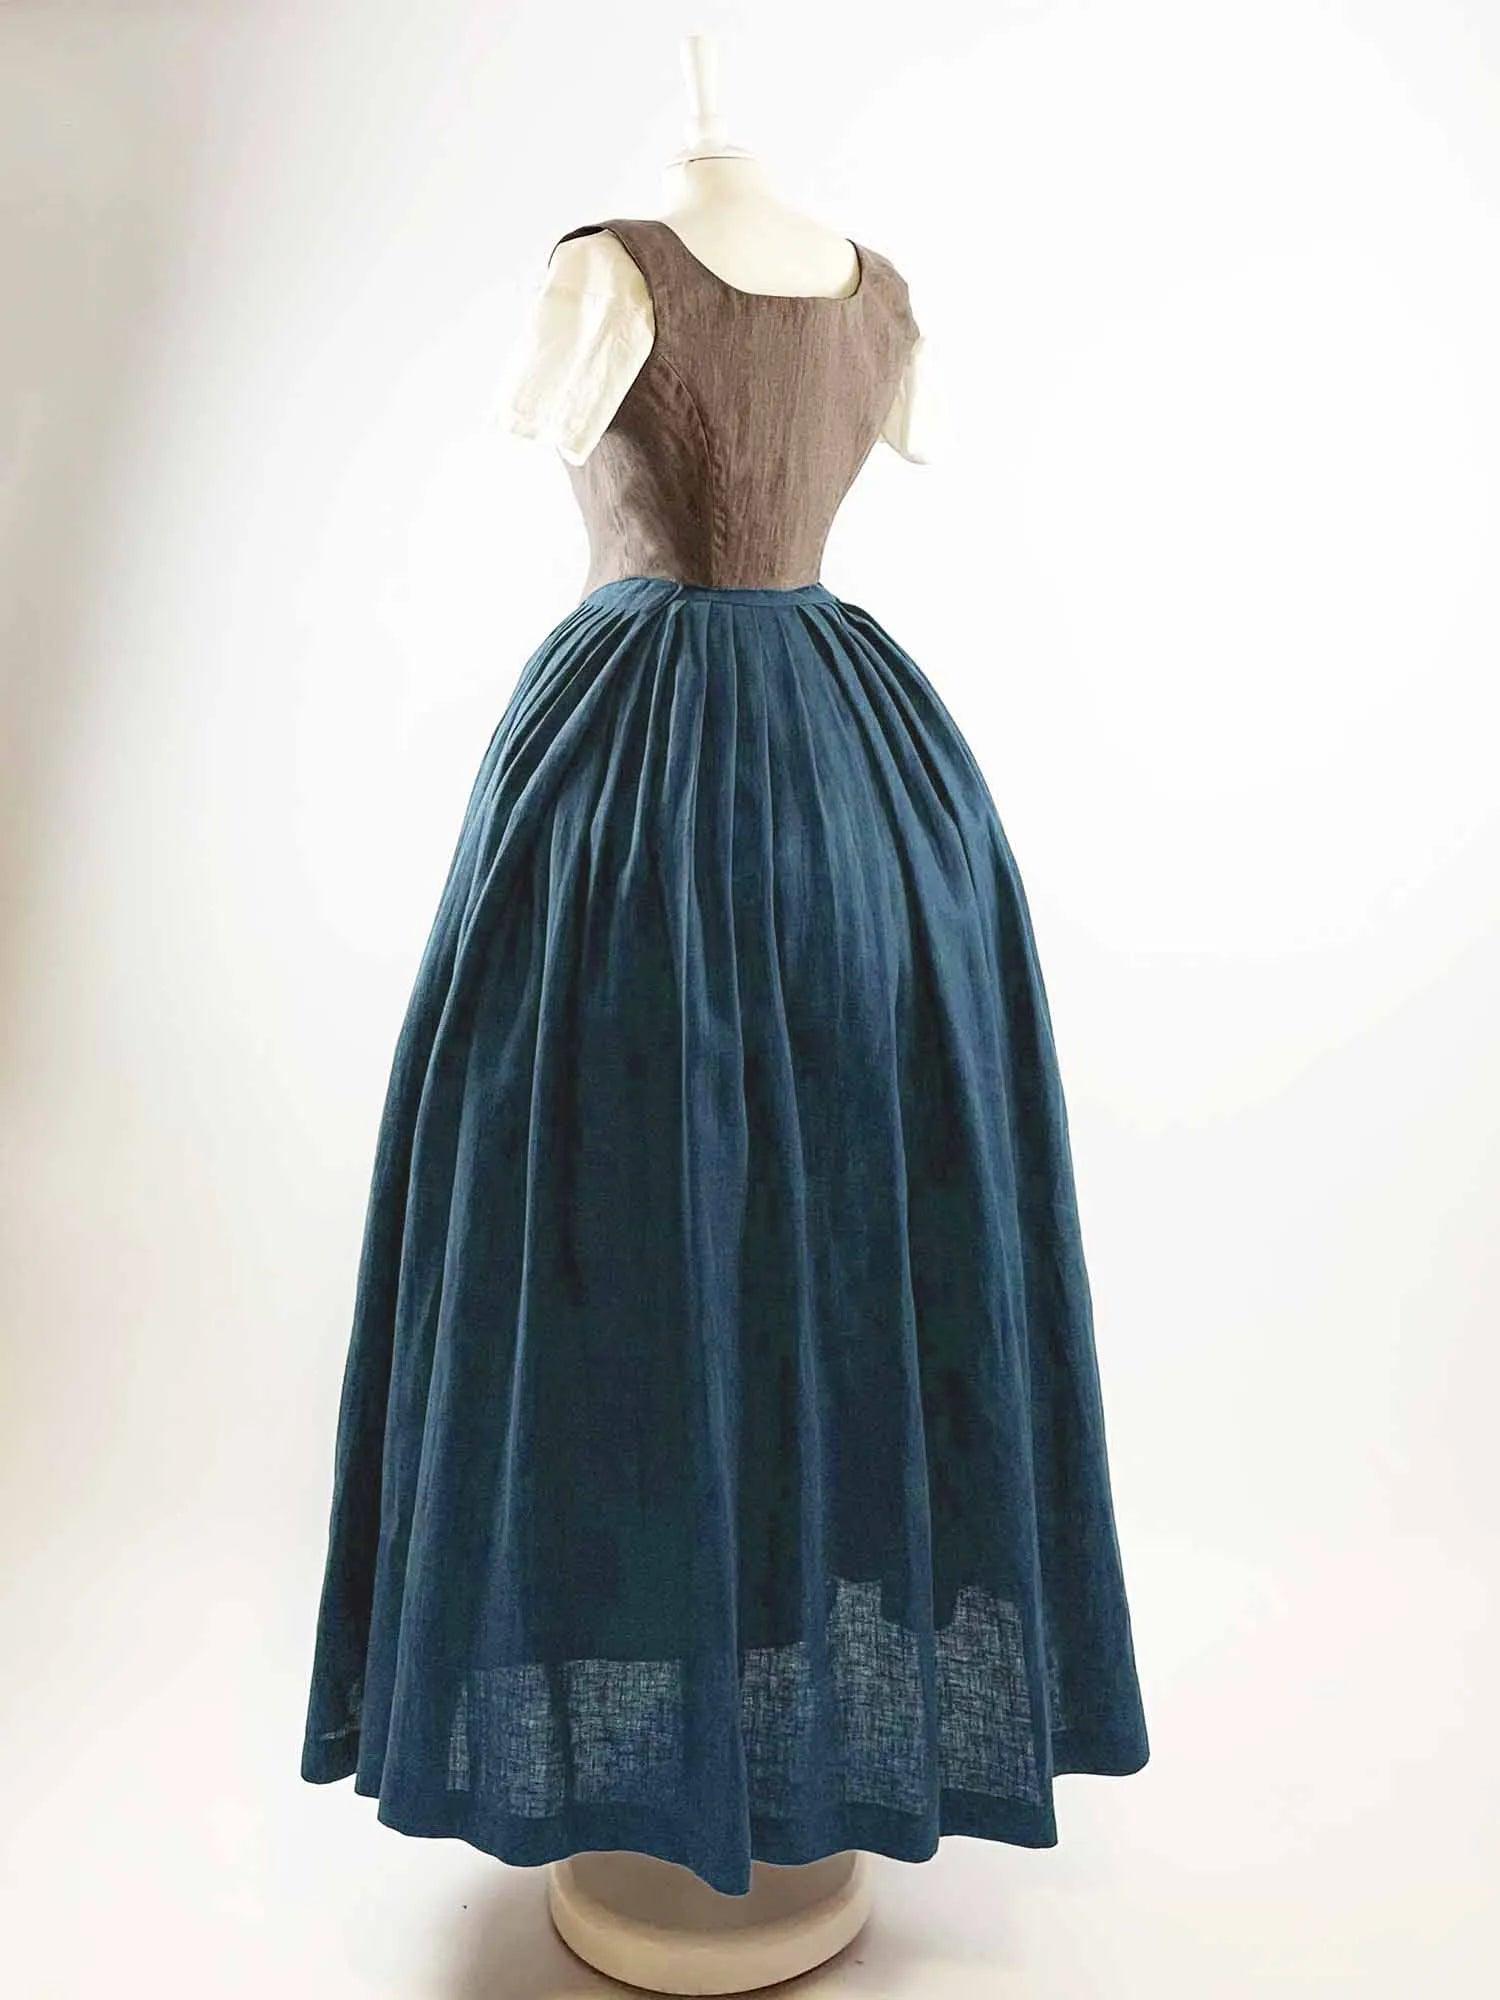 ISOLDE, Renaissance Costume in Brown Gray &amp; Ocean Blue Linen - Atelier Serraspina - Costume Renaissance en Lin Marron-Gris &amp; Bleu Océan